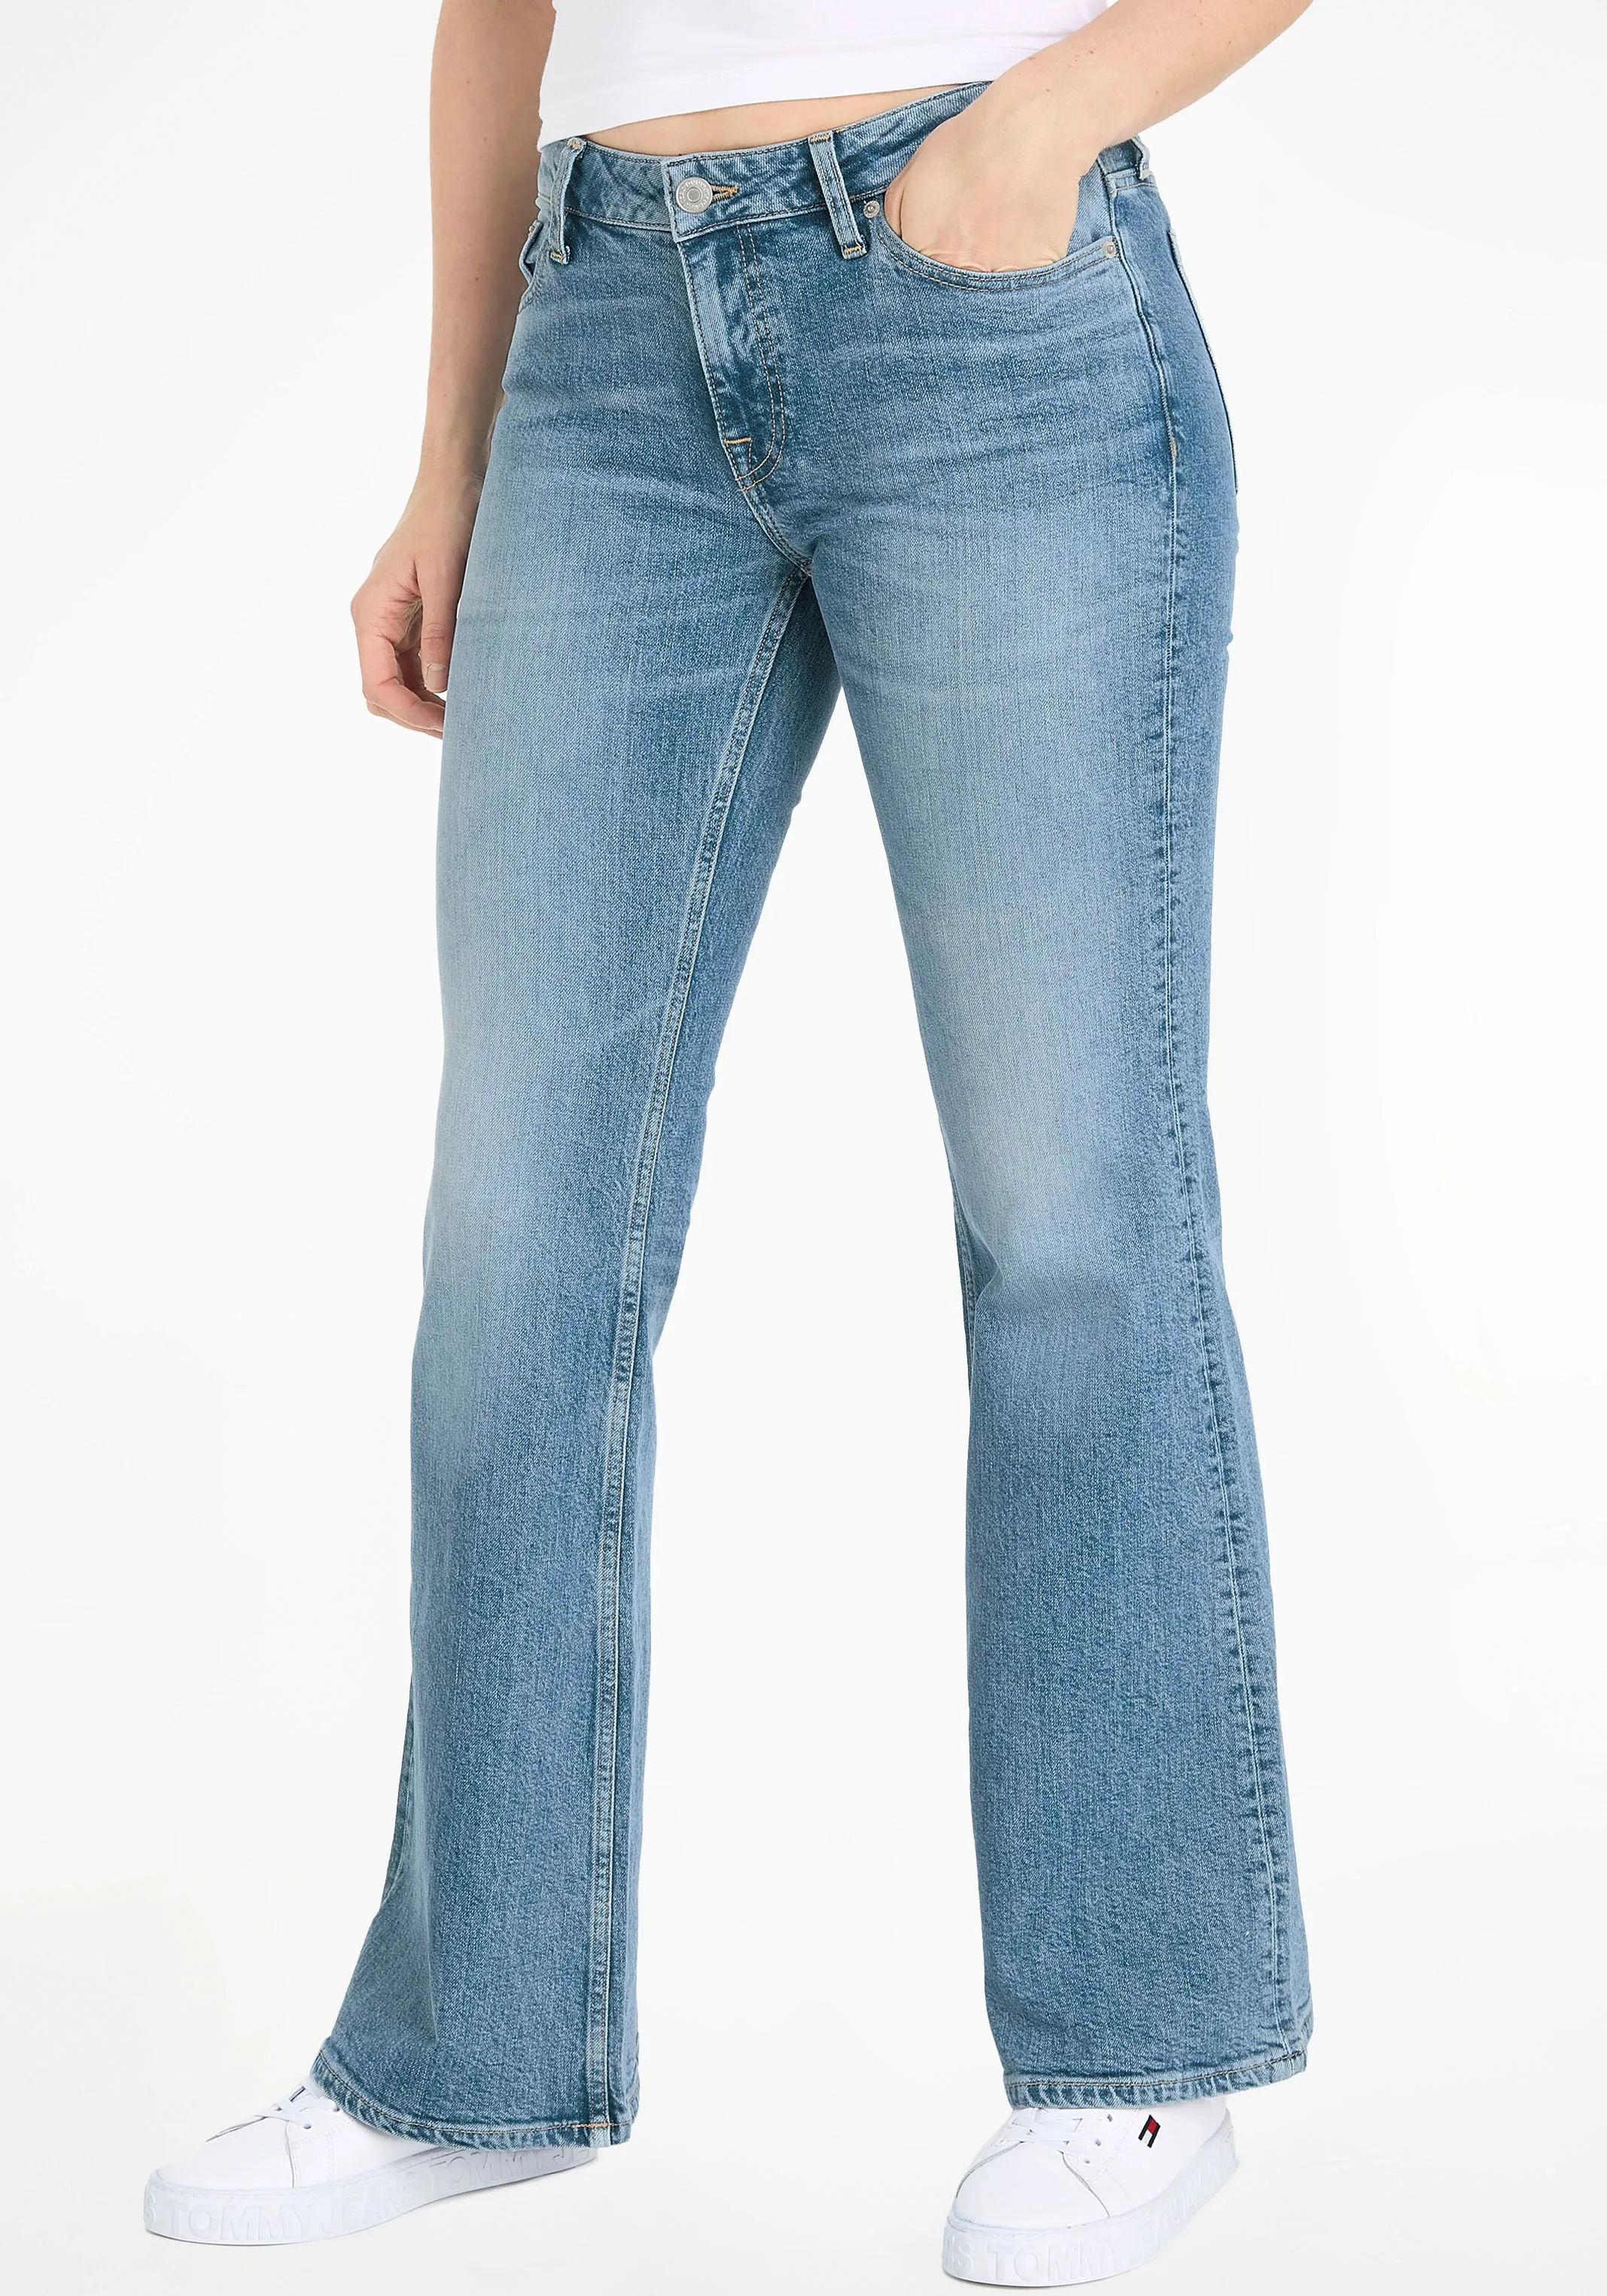 Bequeme Jeans TOMMY JEANS Gr. 29, Länge 30, blau (light denim3) Damen Jeans Bootcut mit Ledermarkenlabel